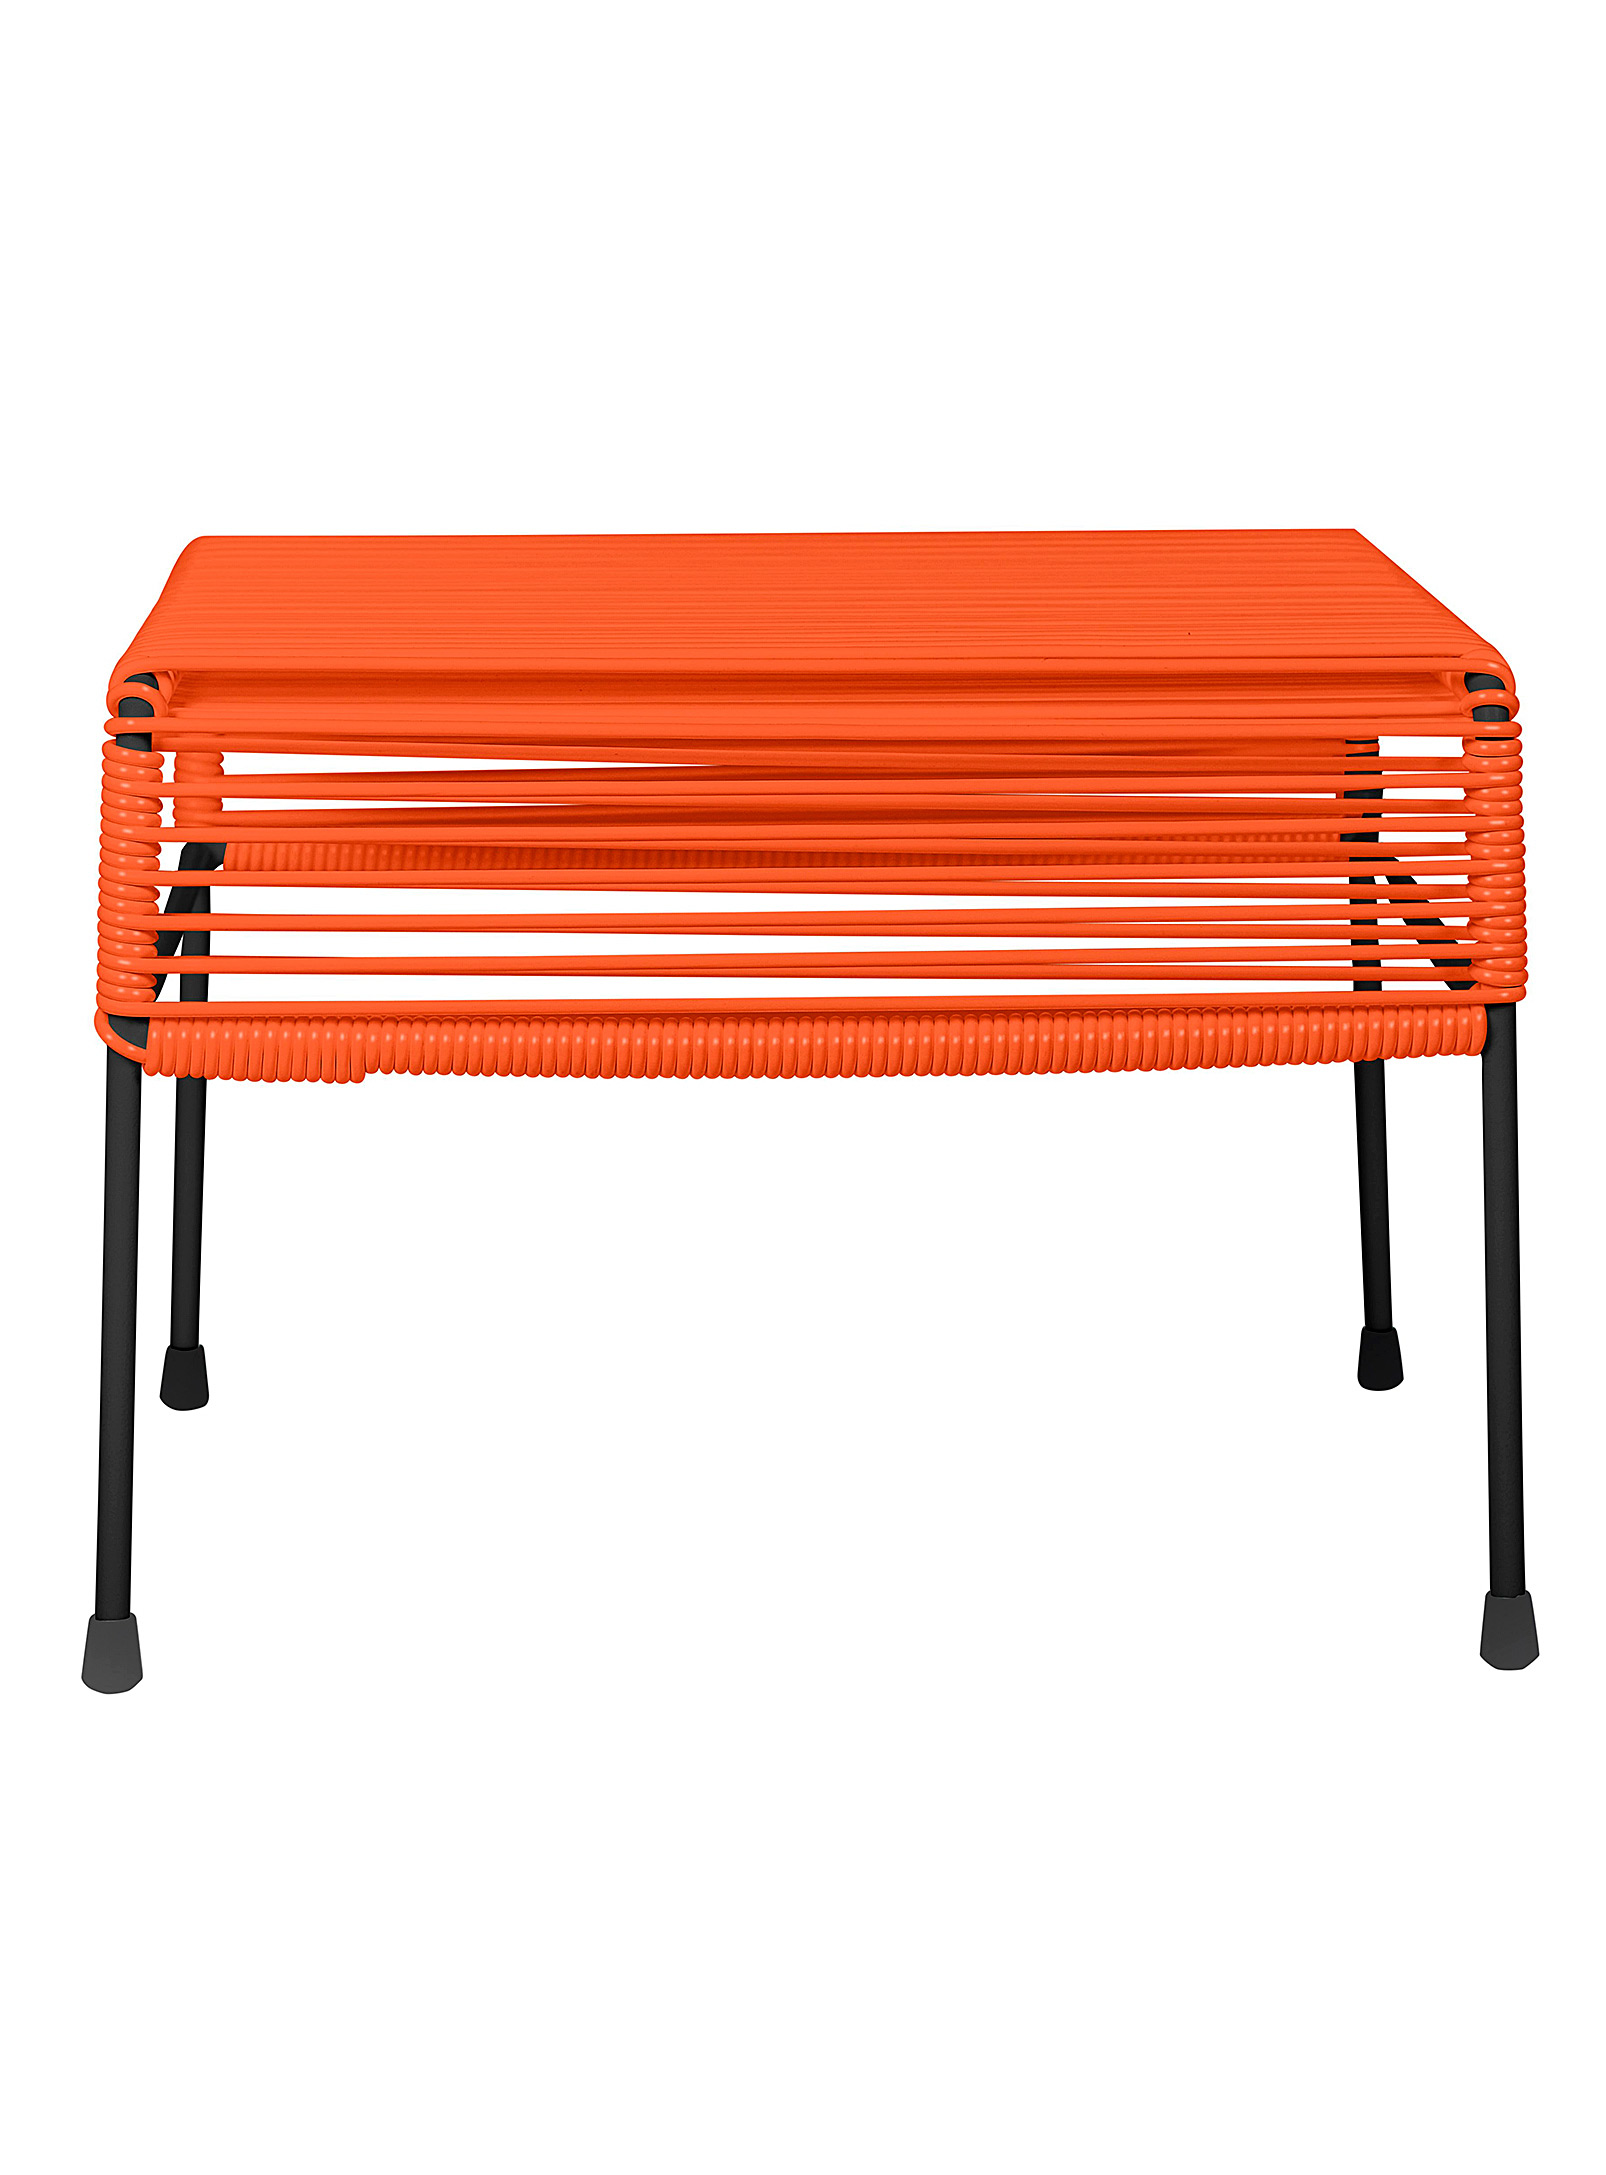 Simons Maison Atom Small Outdoor Table In Orange